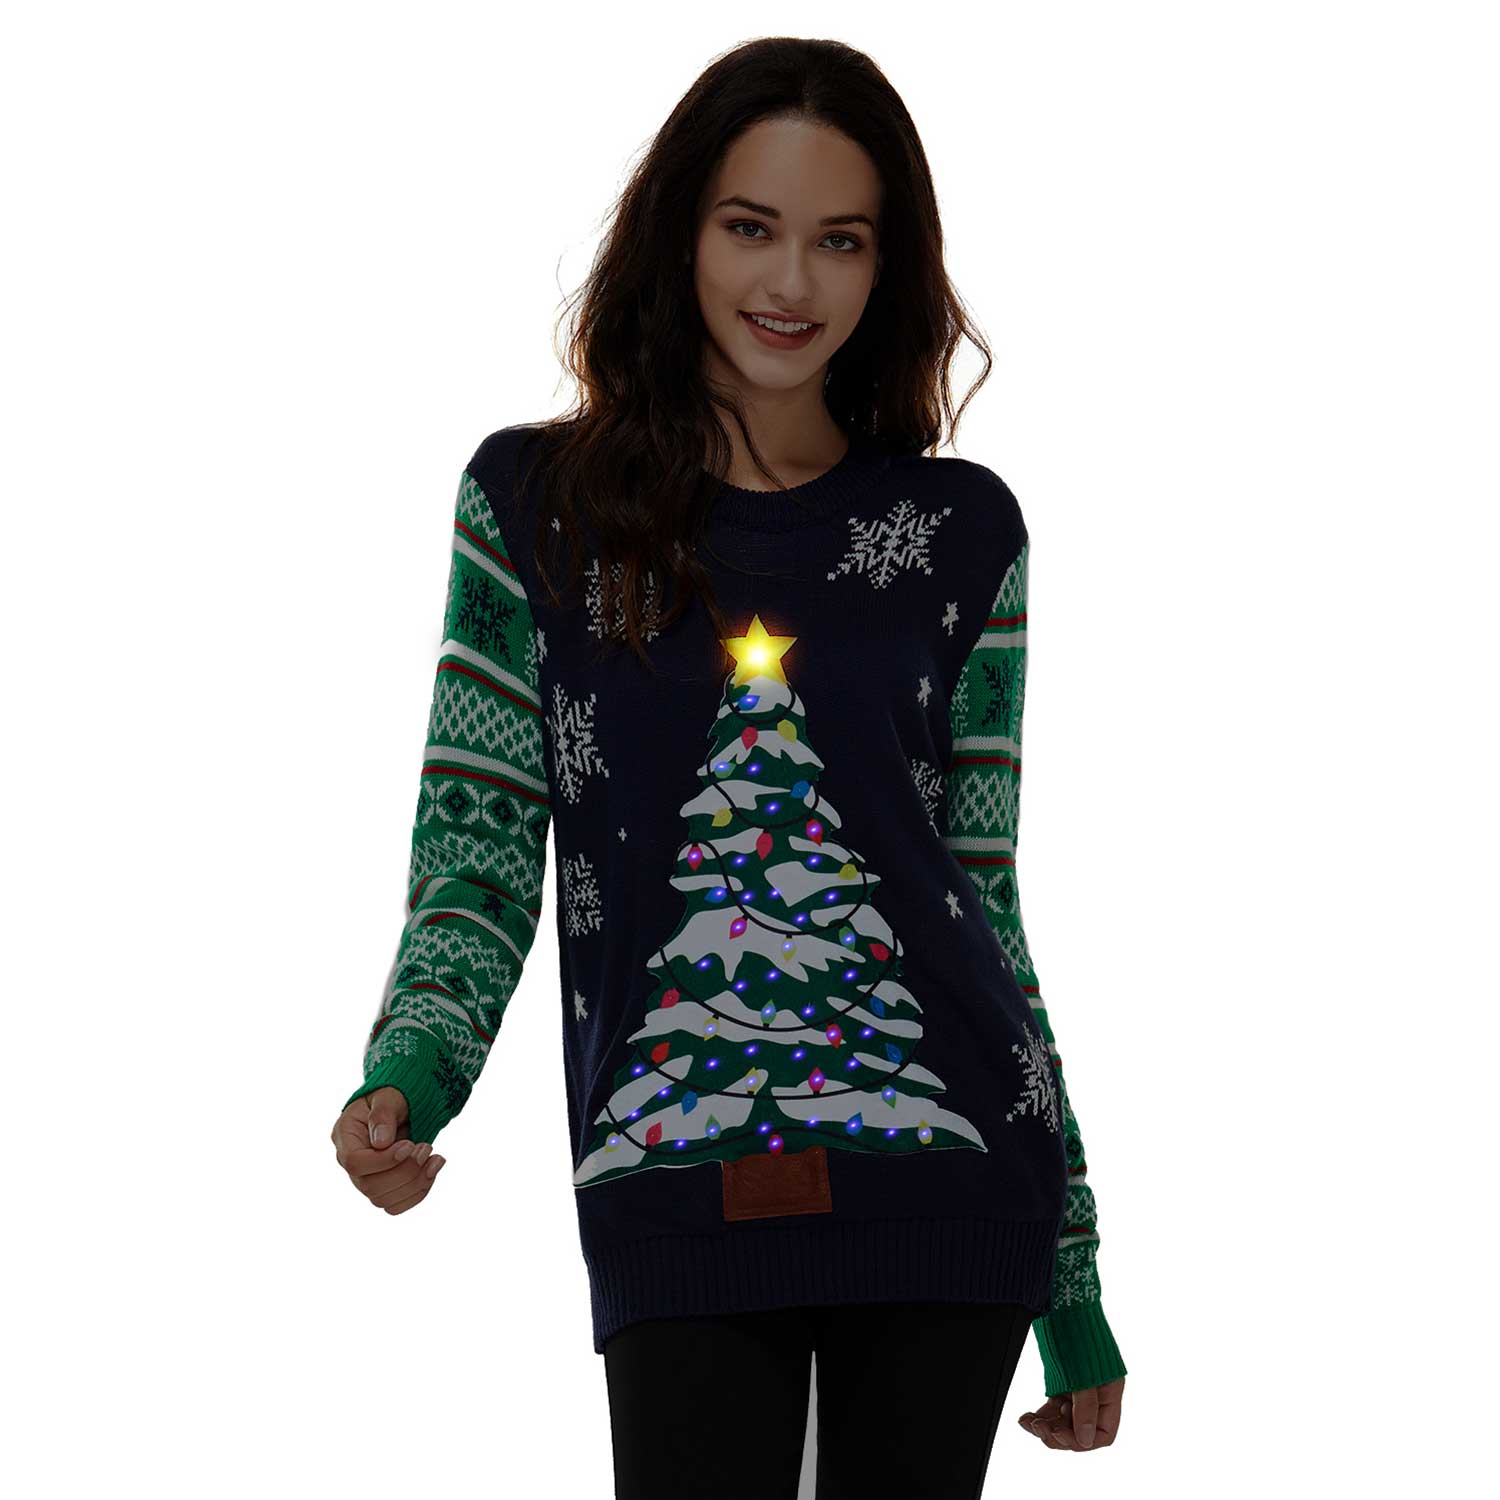 Festive Christmas Tree LED Light Up Mens Funny Sweater